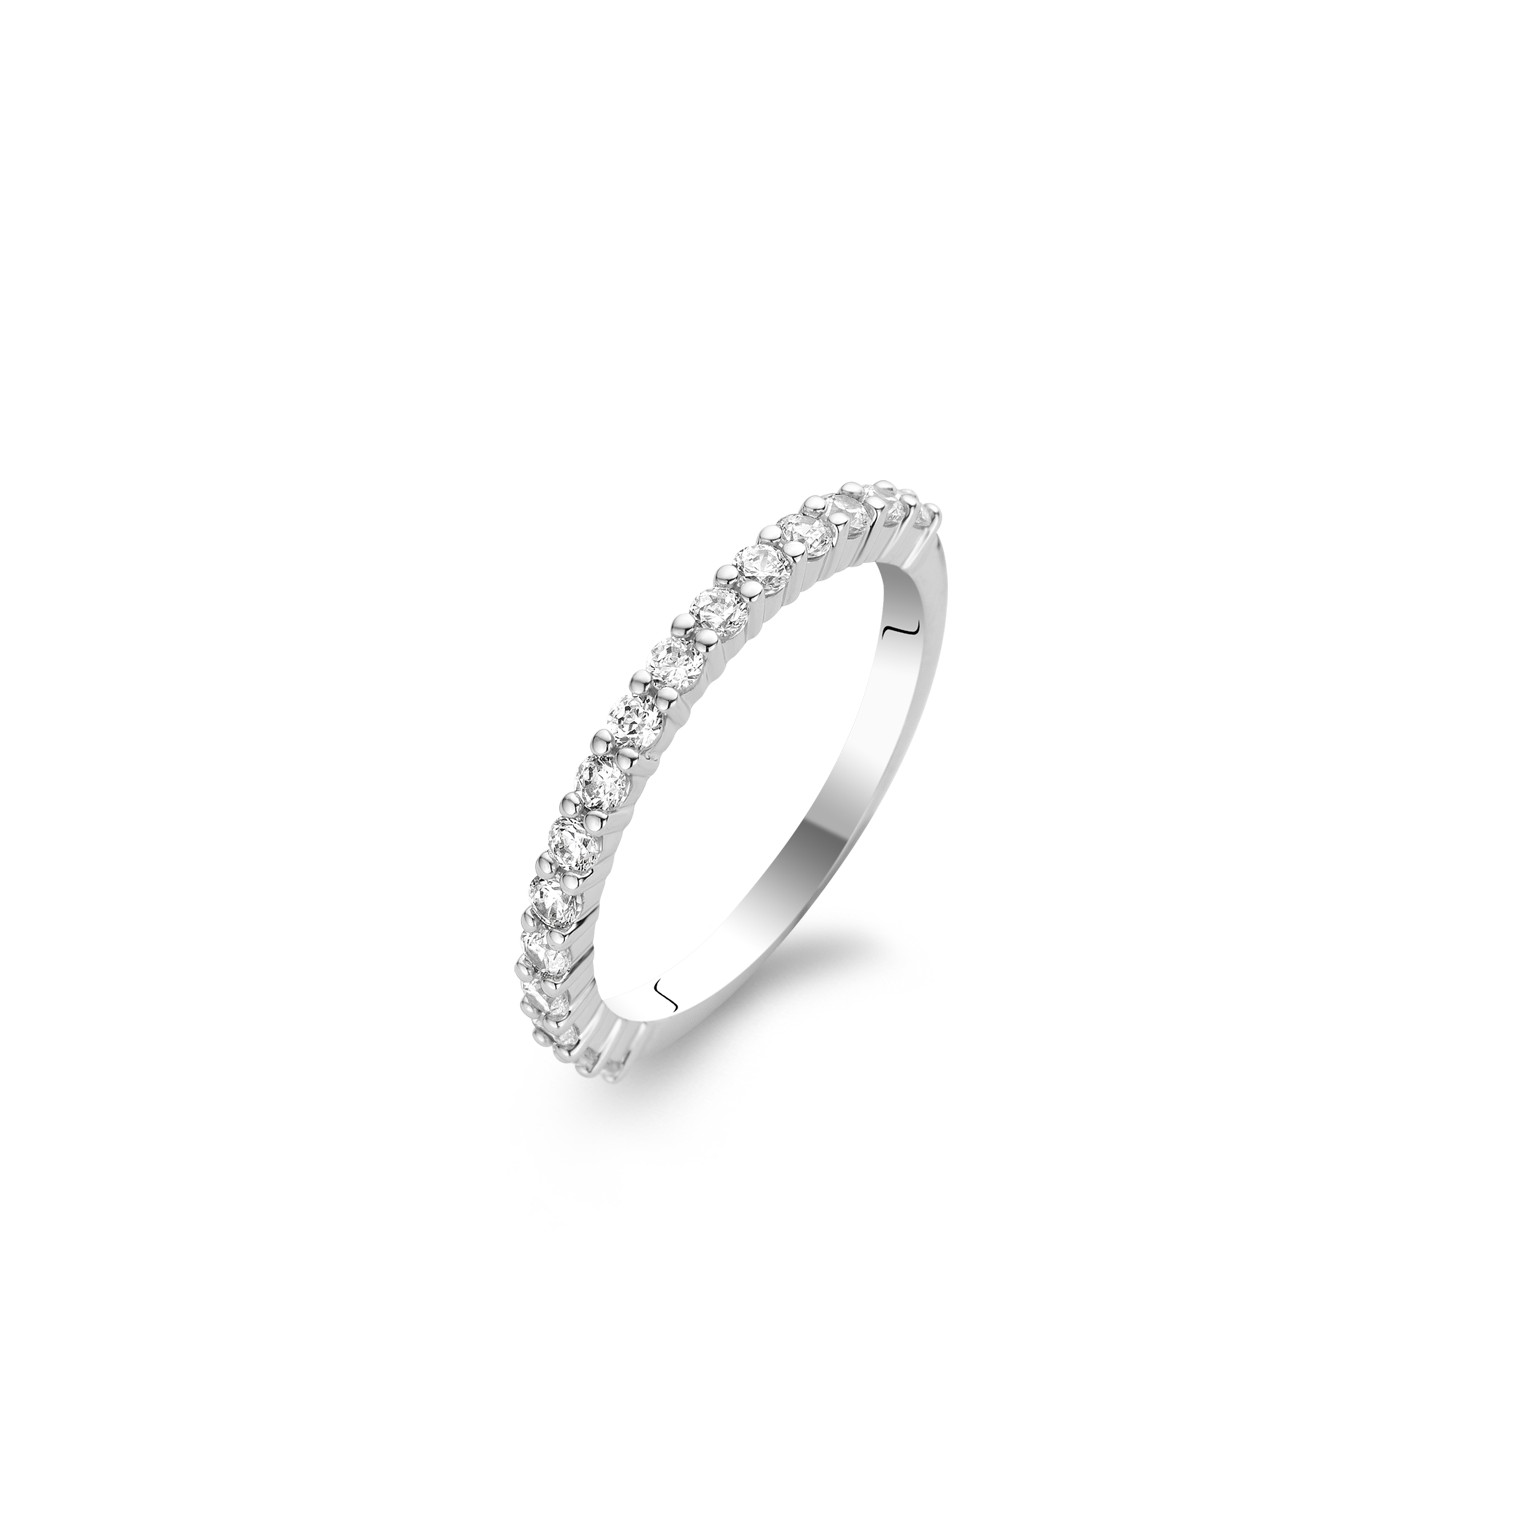 TI SENTO - Milano Ring 1918ZI Gala Jewelers Inc. White Oak, PA